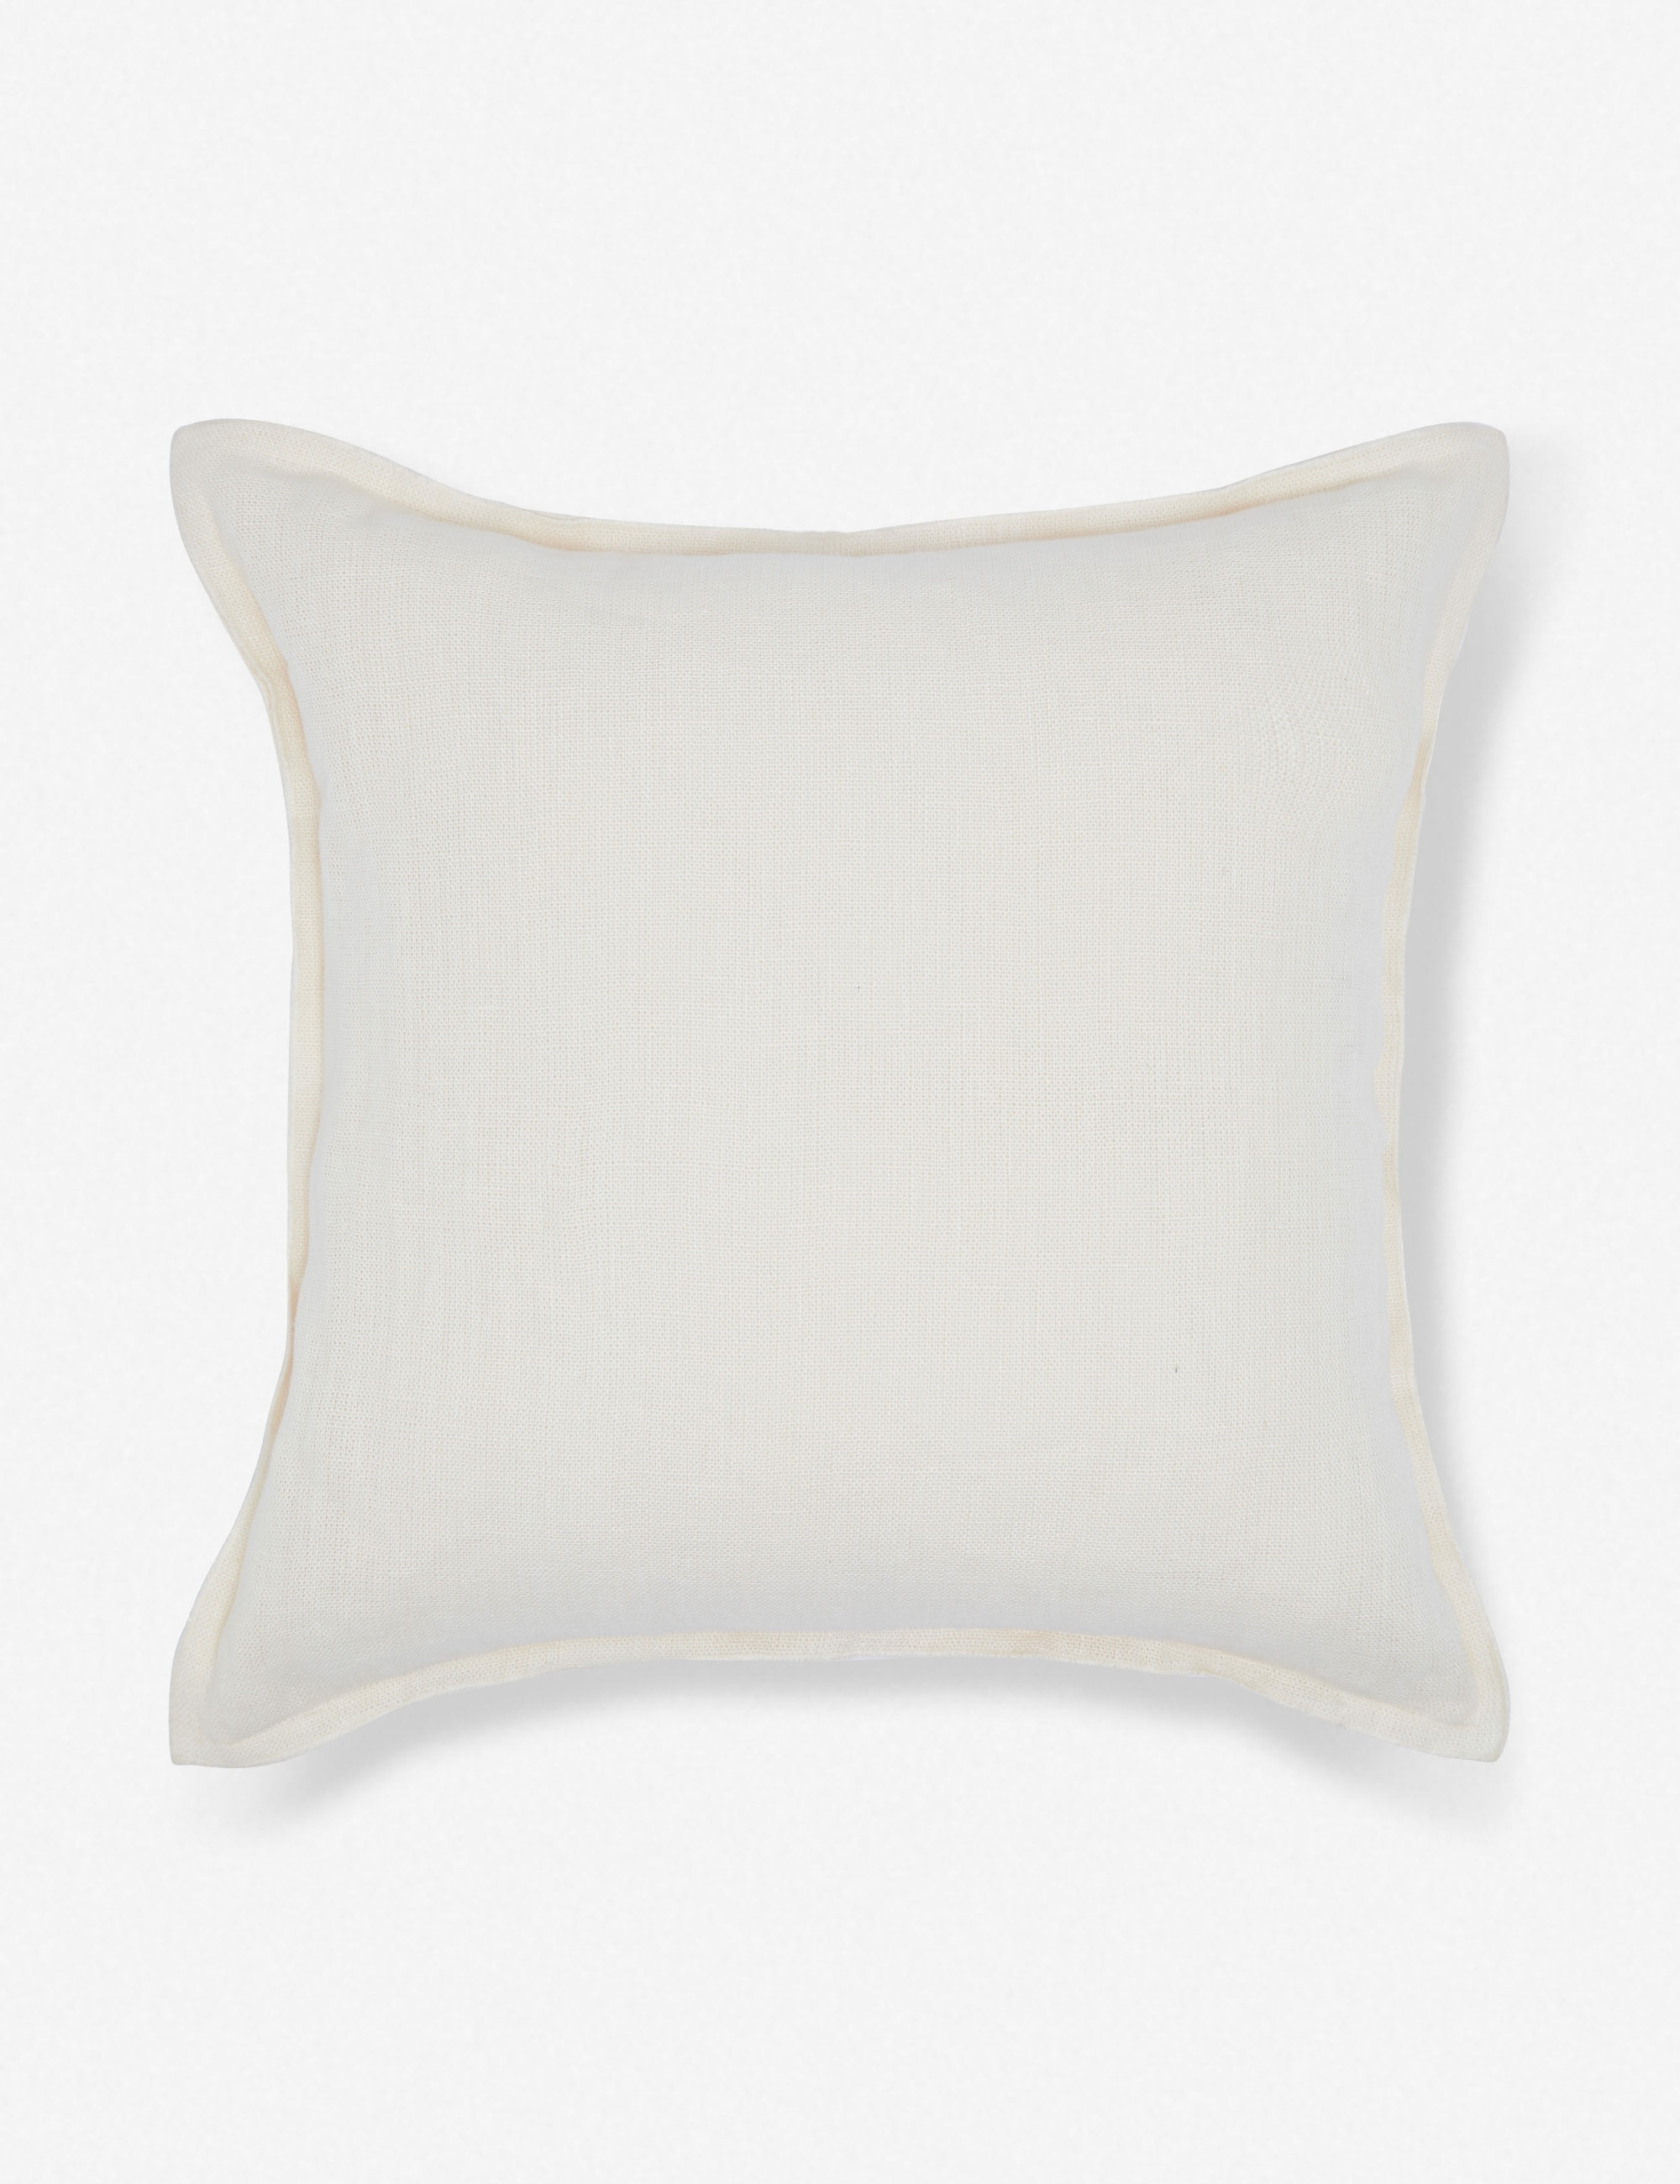 Arlo Linen Pillow, Ivory - Image 0